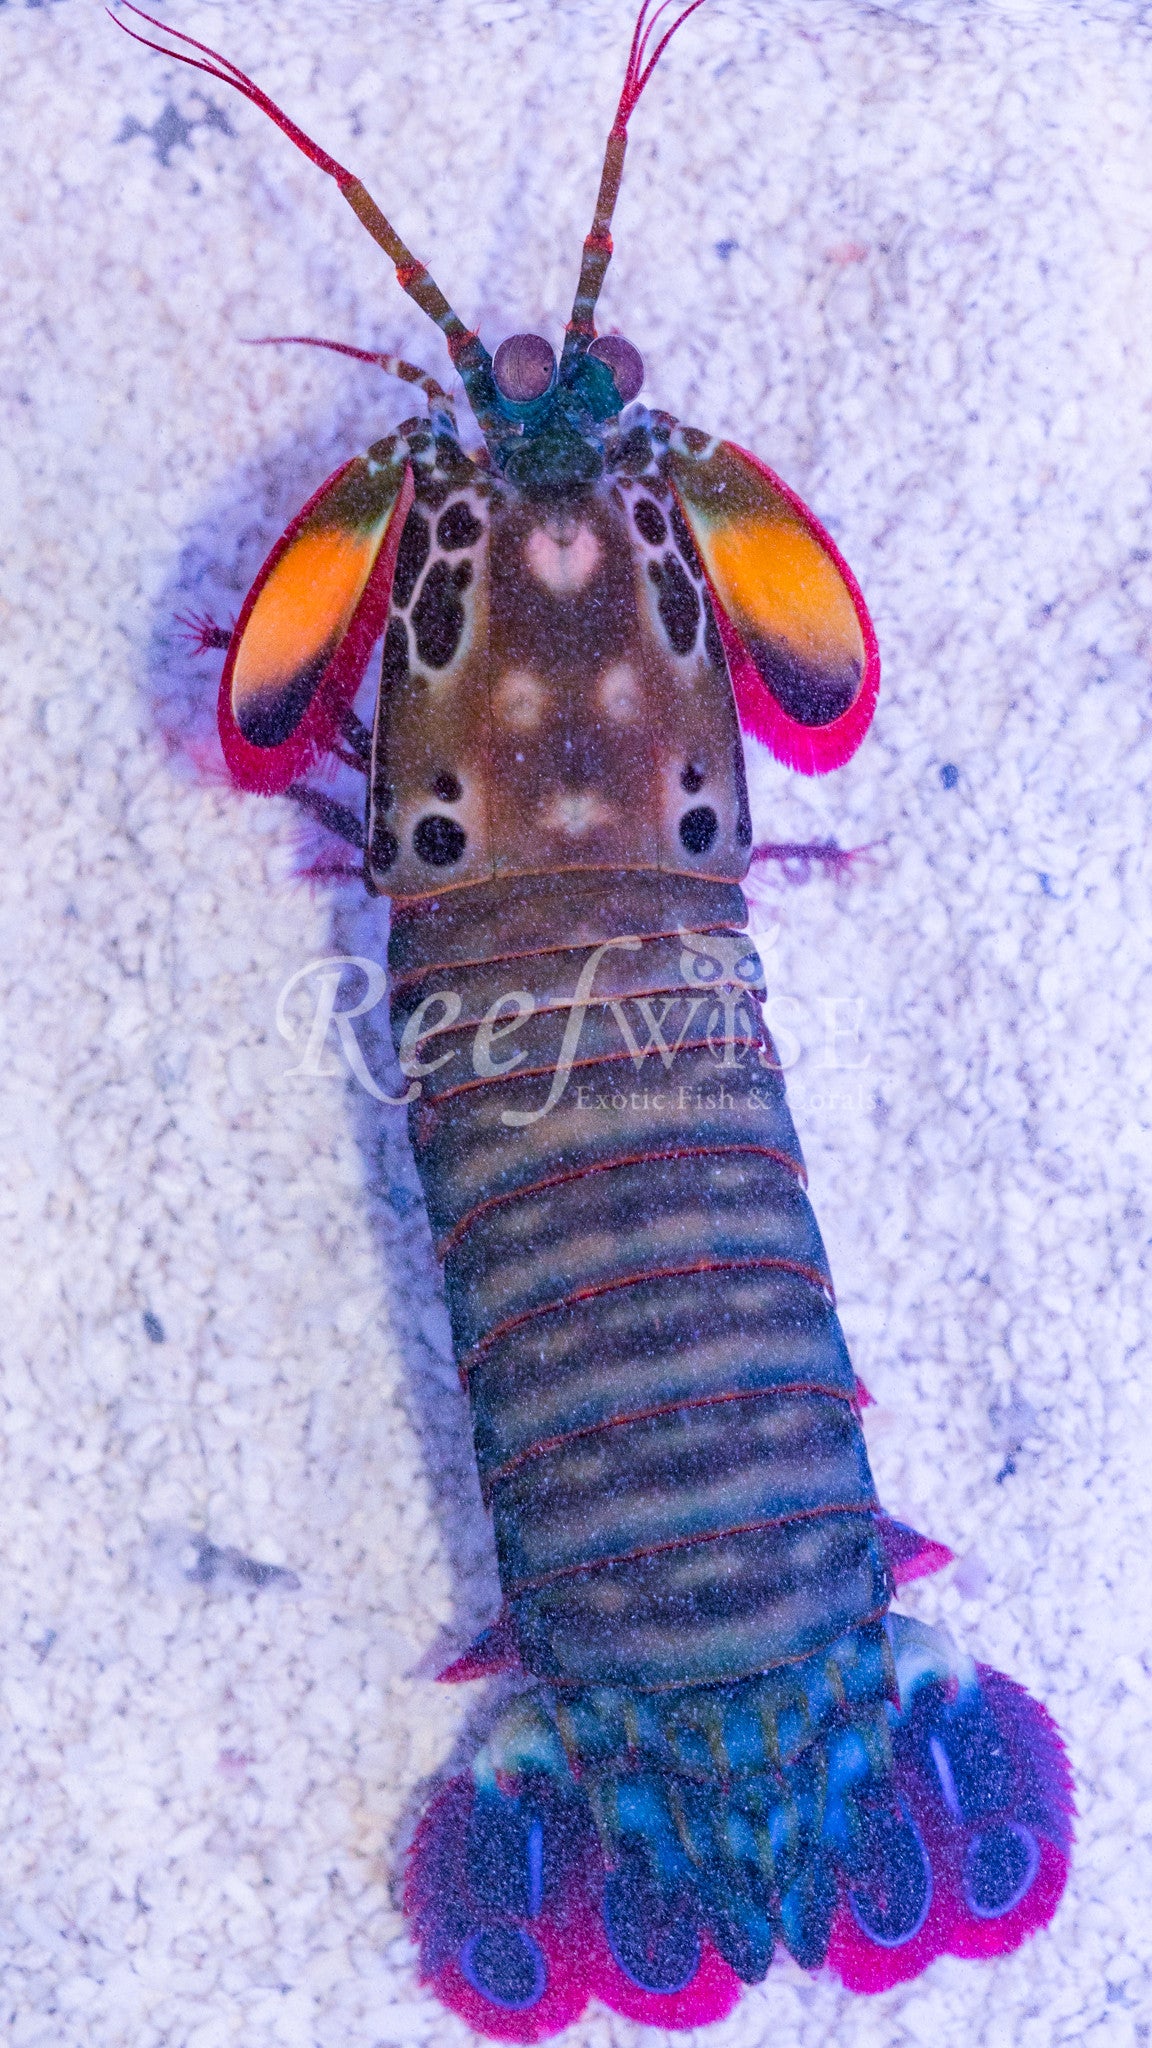 Download Peacock Mantis Shrimp Pair - Reefwise